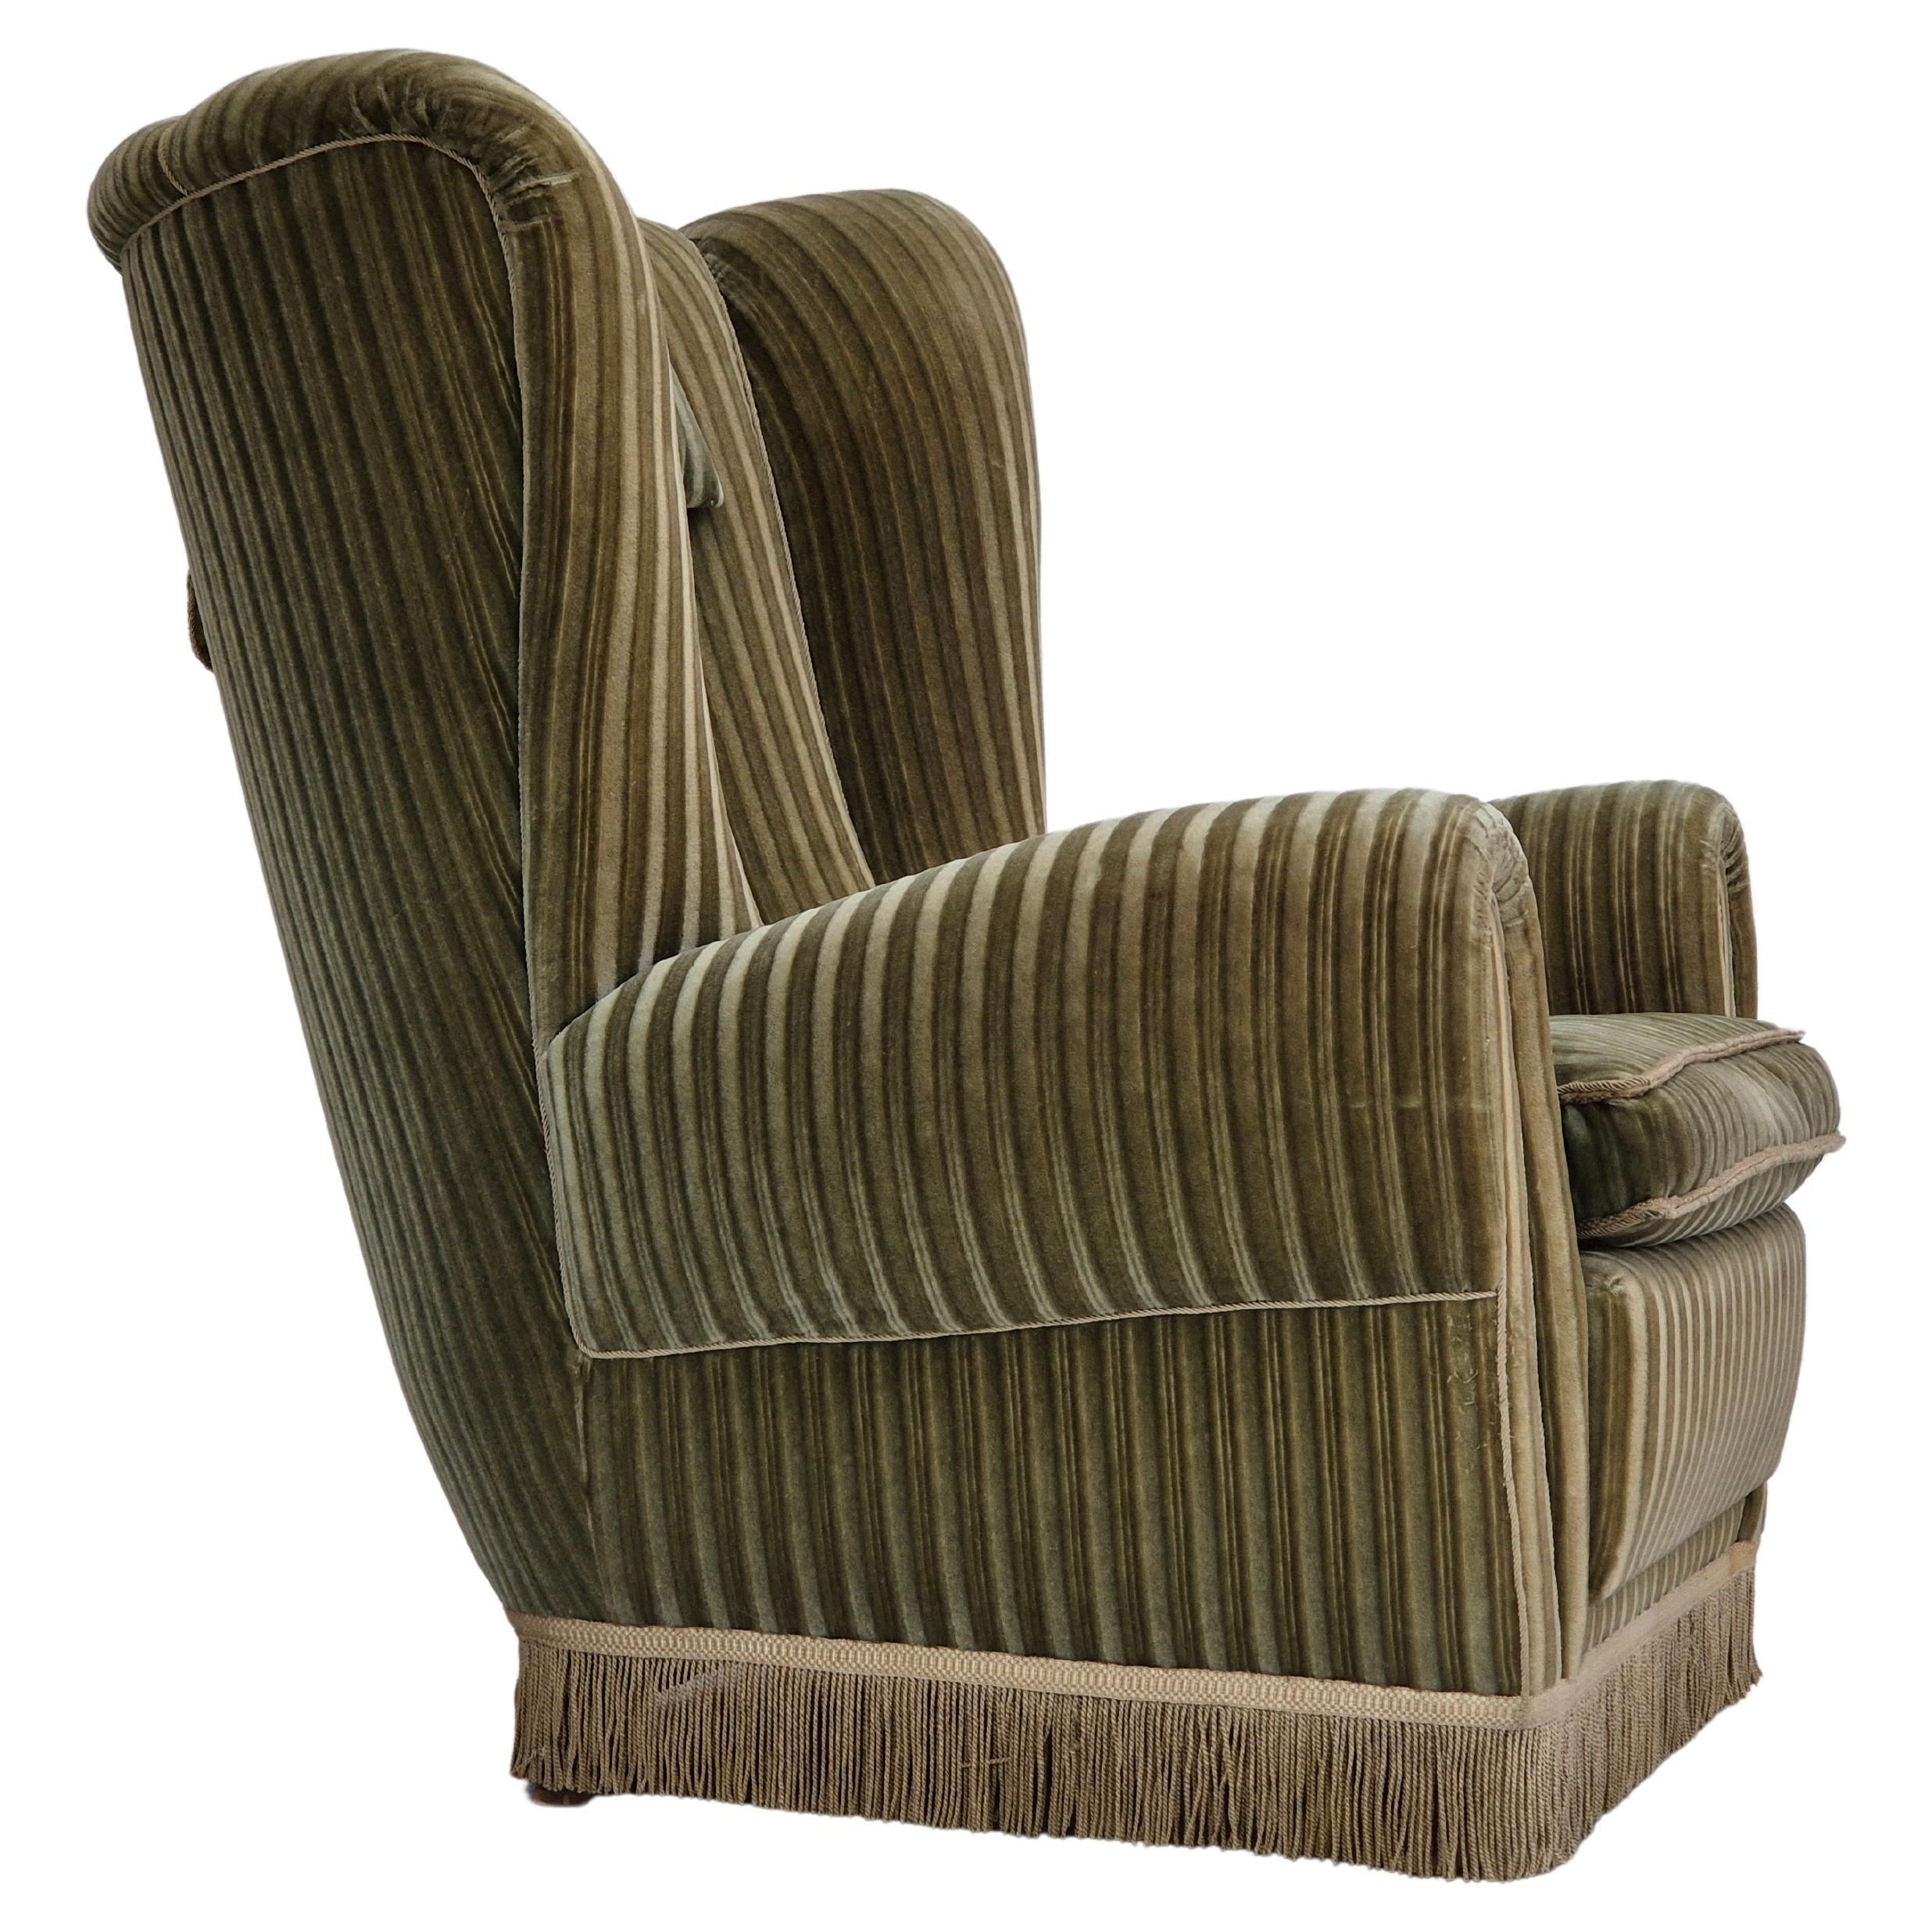 1960s, Danish highback relax armchair, original condition, furniture velour.